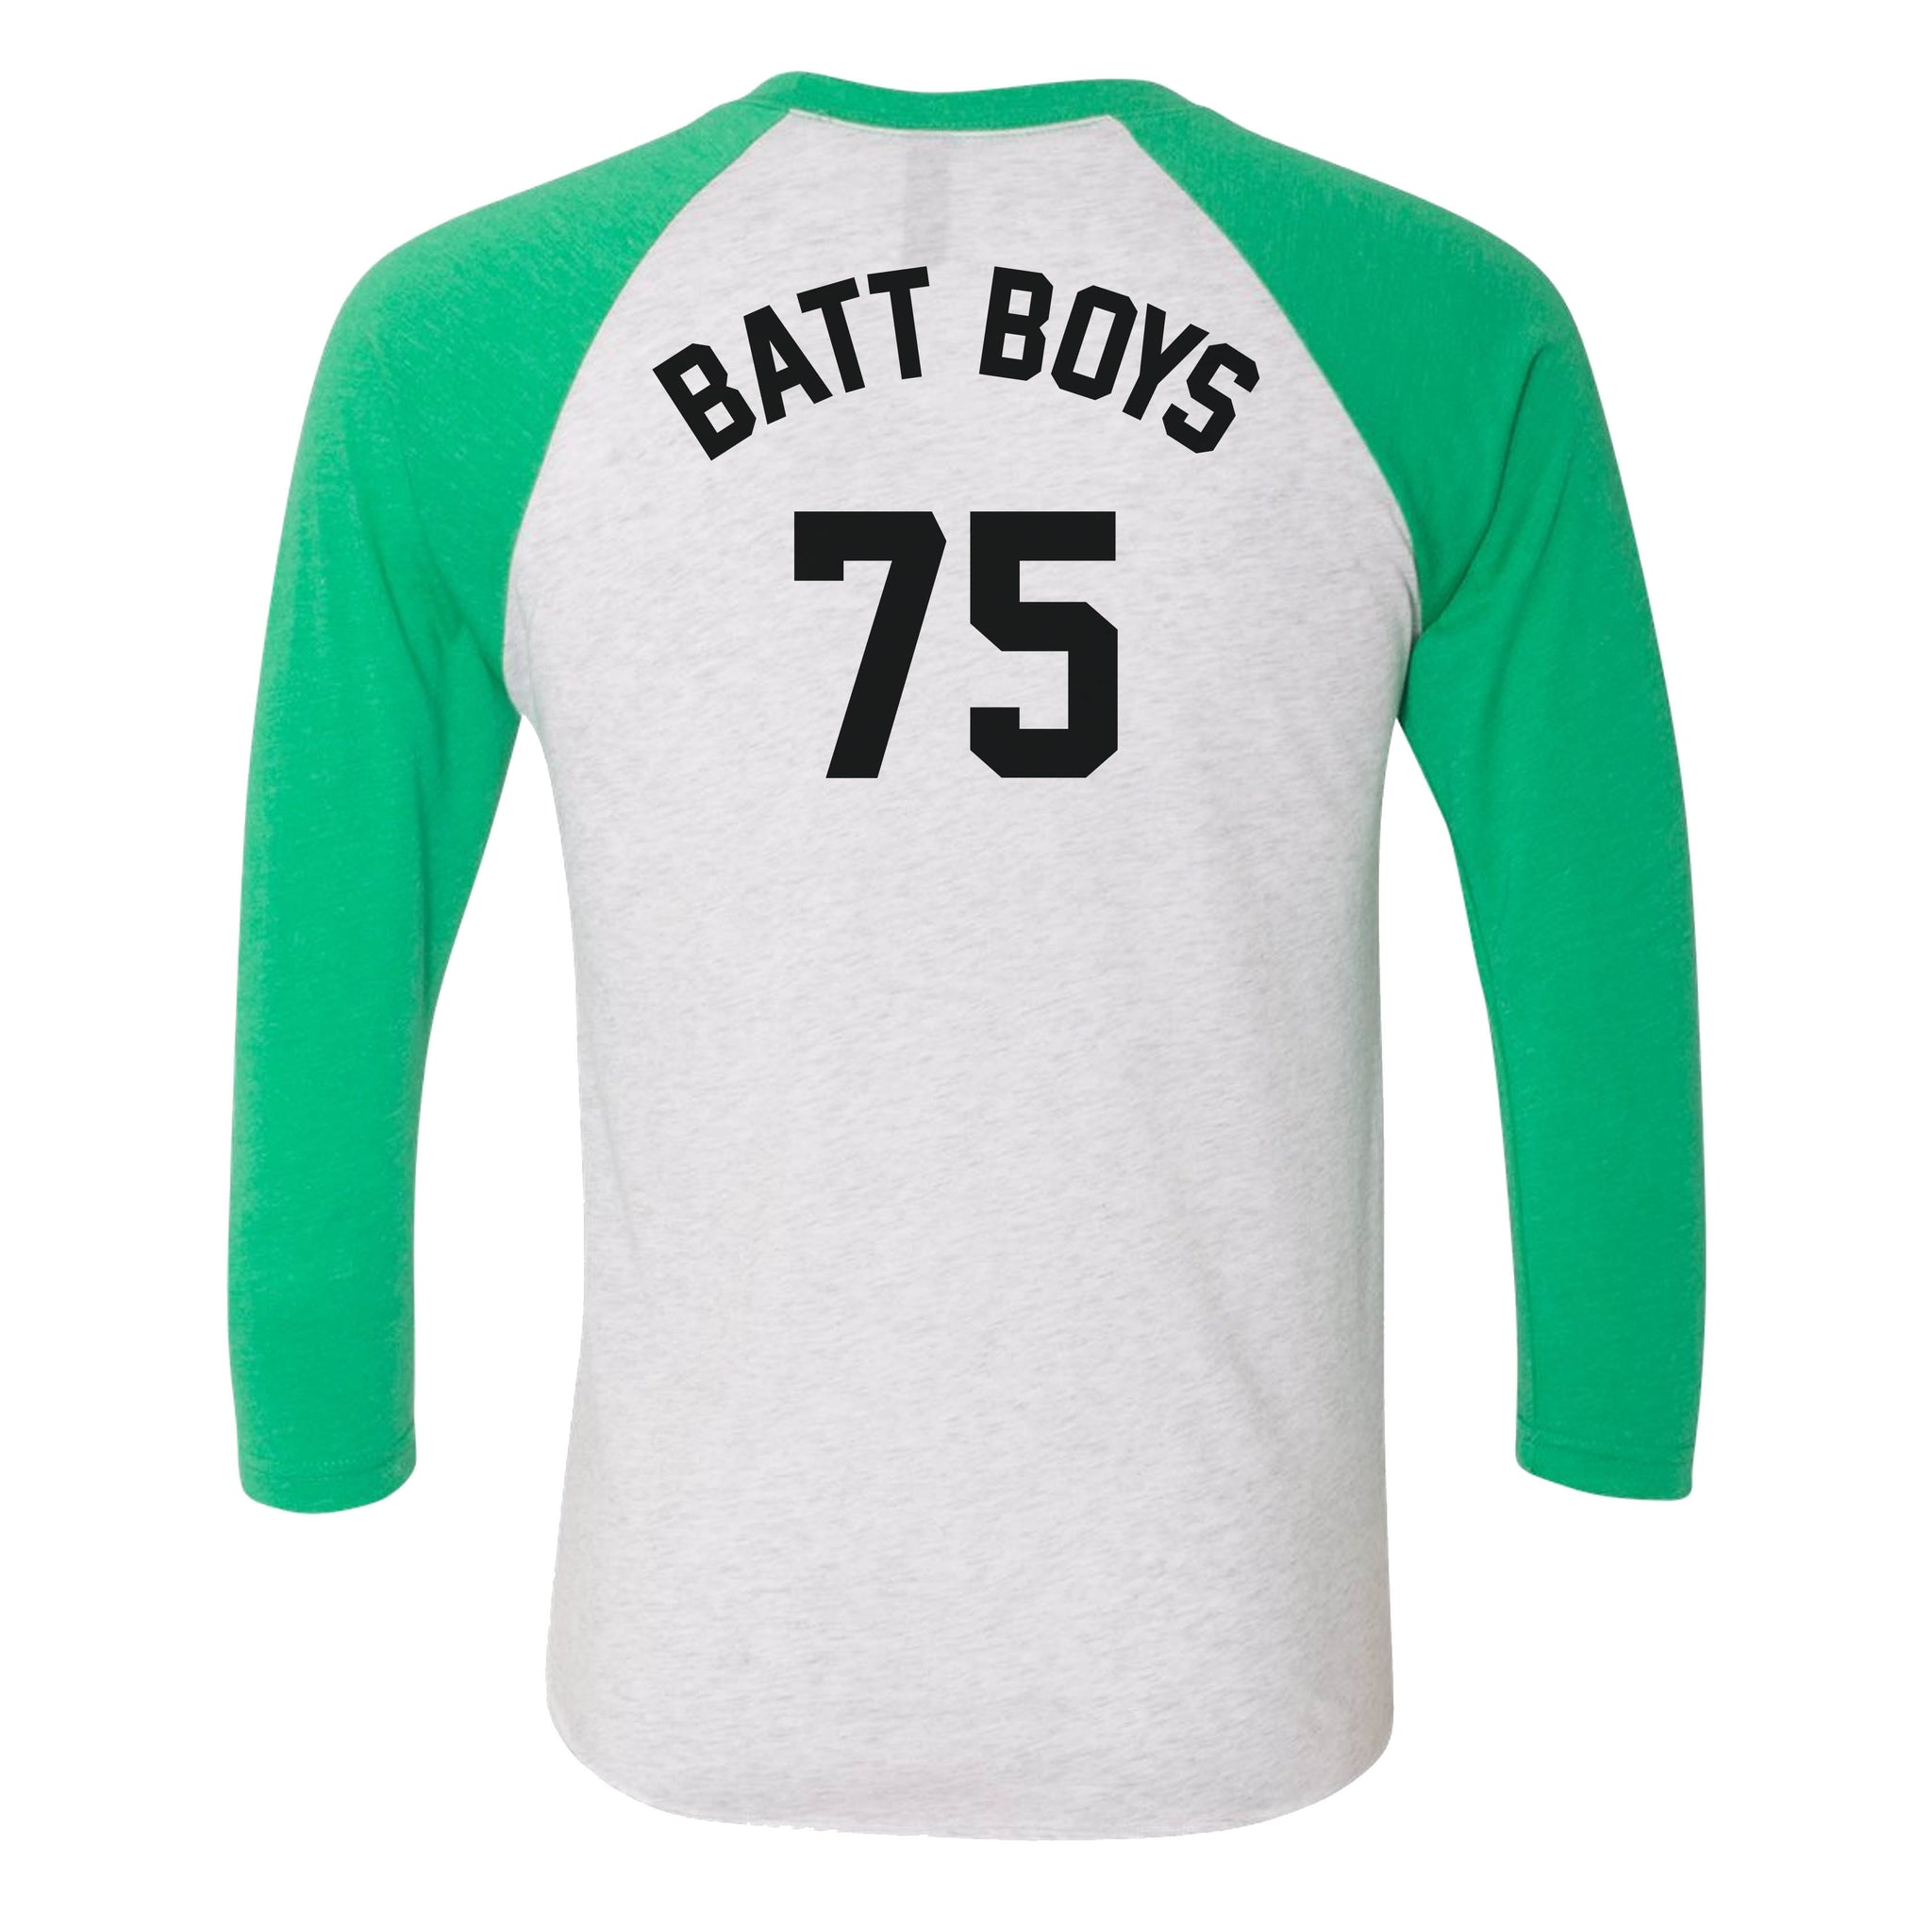 Batt Boys Raglan 3/4 Sleeve Shirt